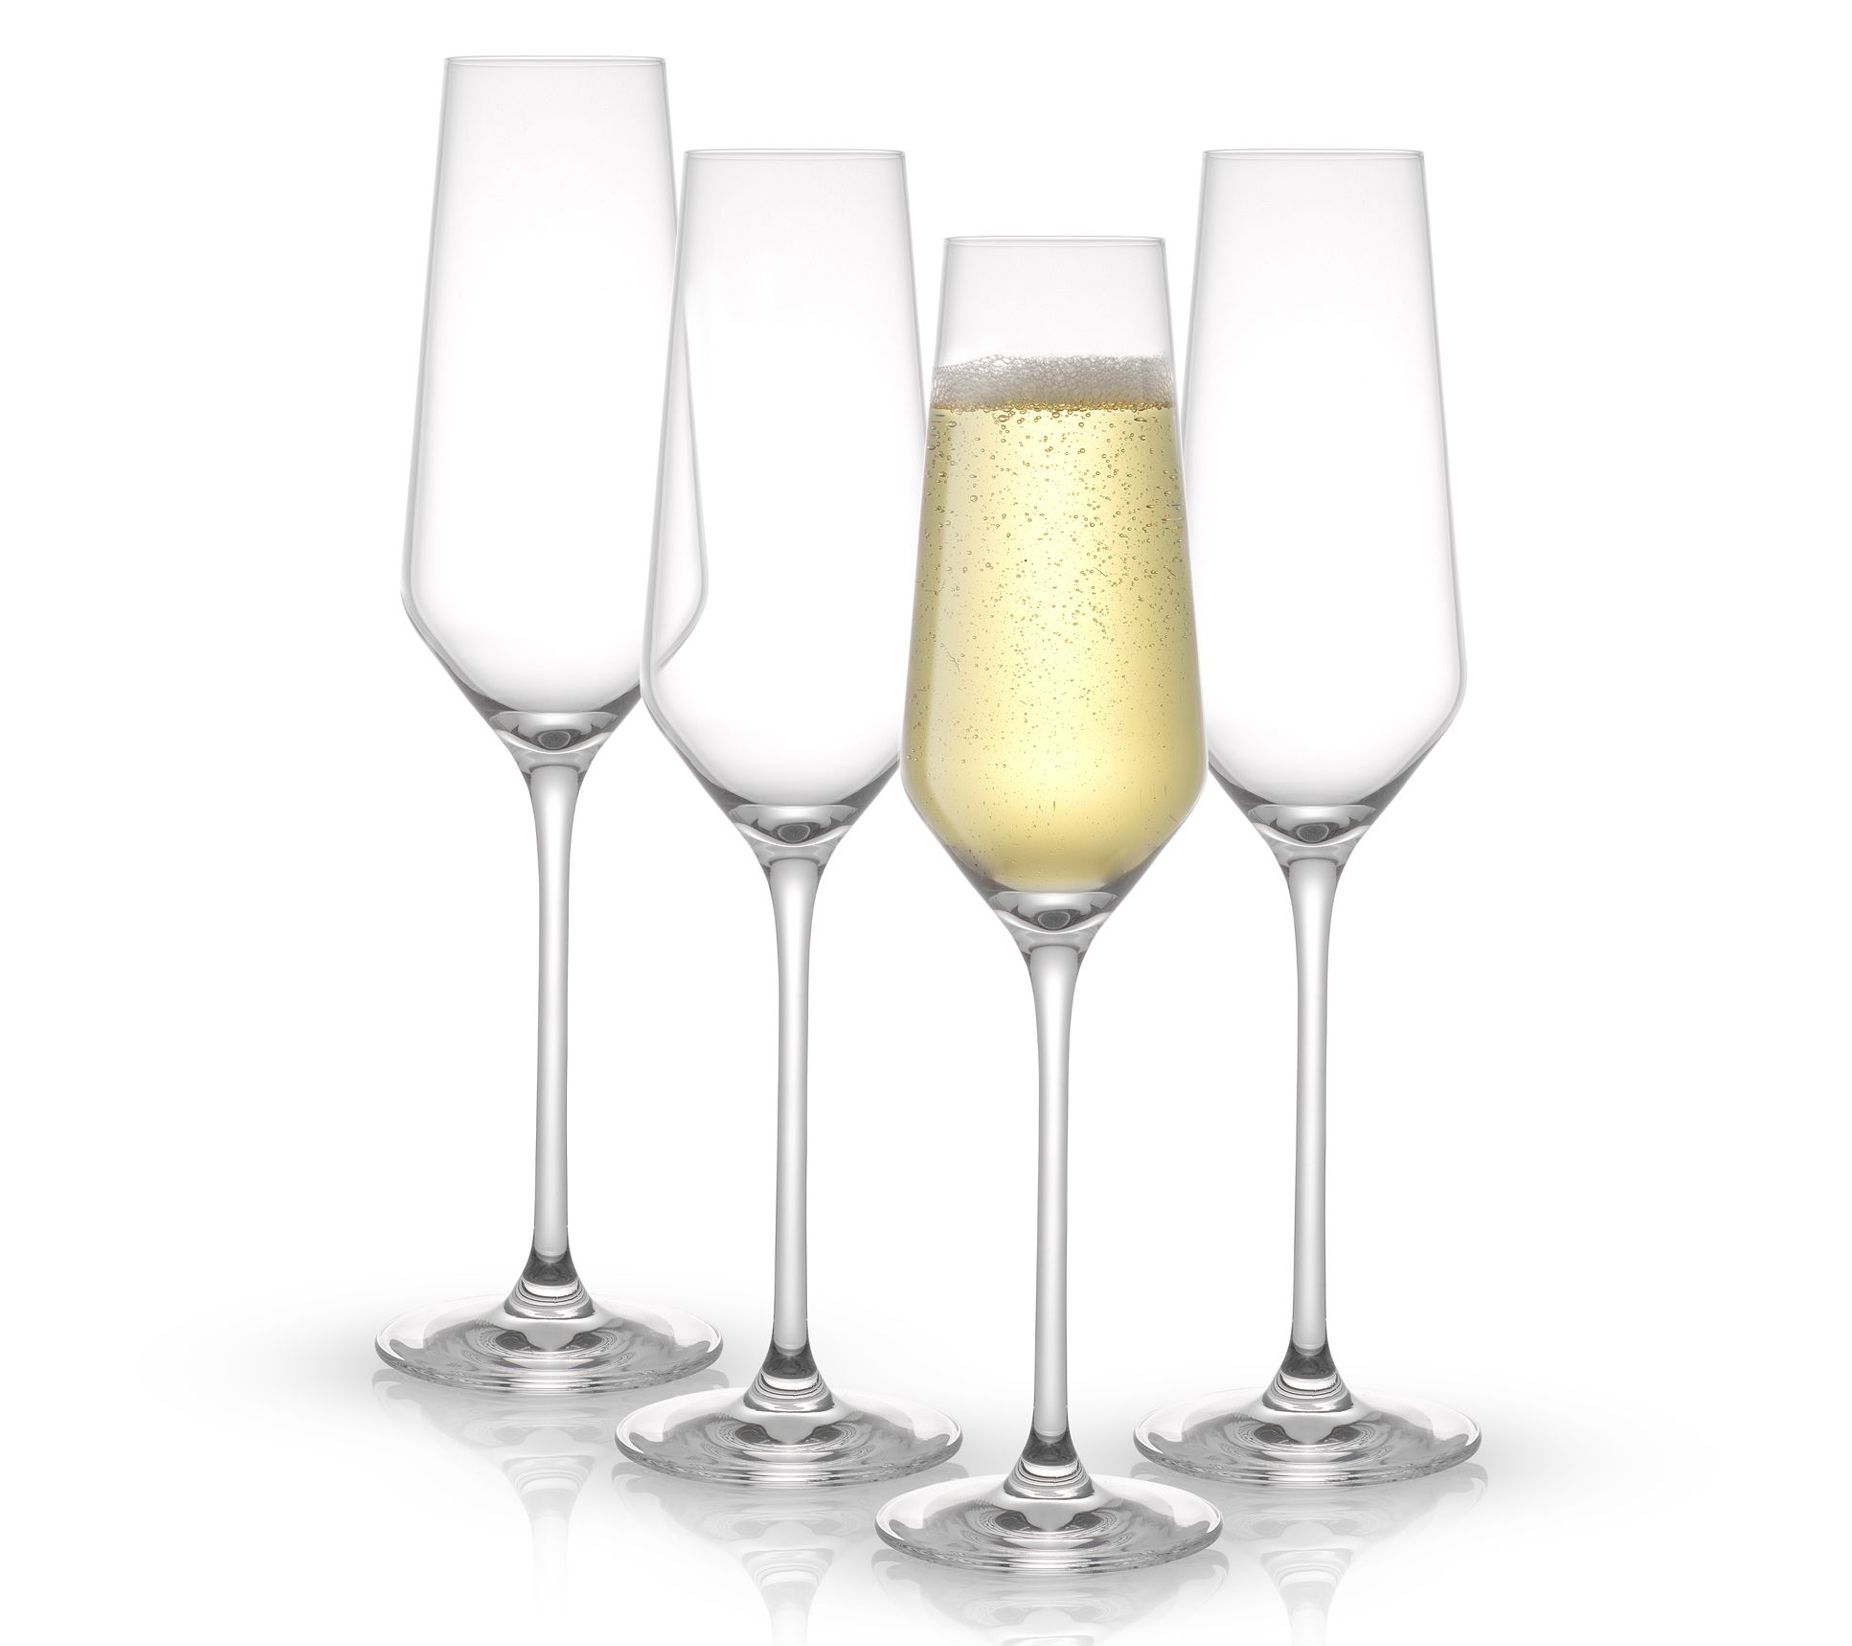 JoyJolt Disney Luxury Mickey Mouse Crystal Stemmed White Wine Glass - 16 oz - Set of 2